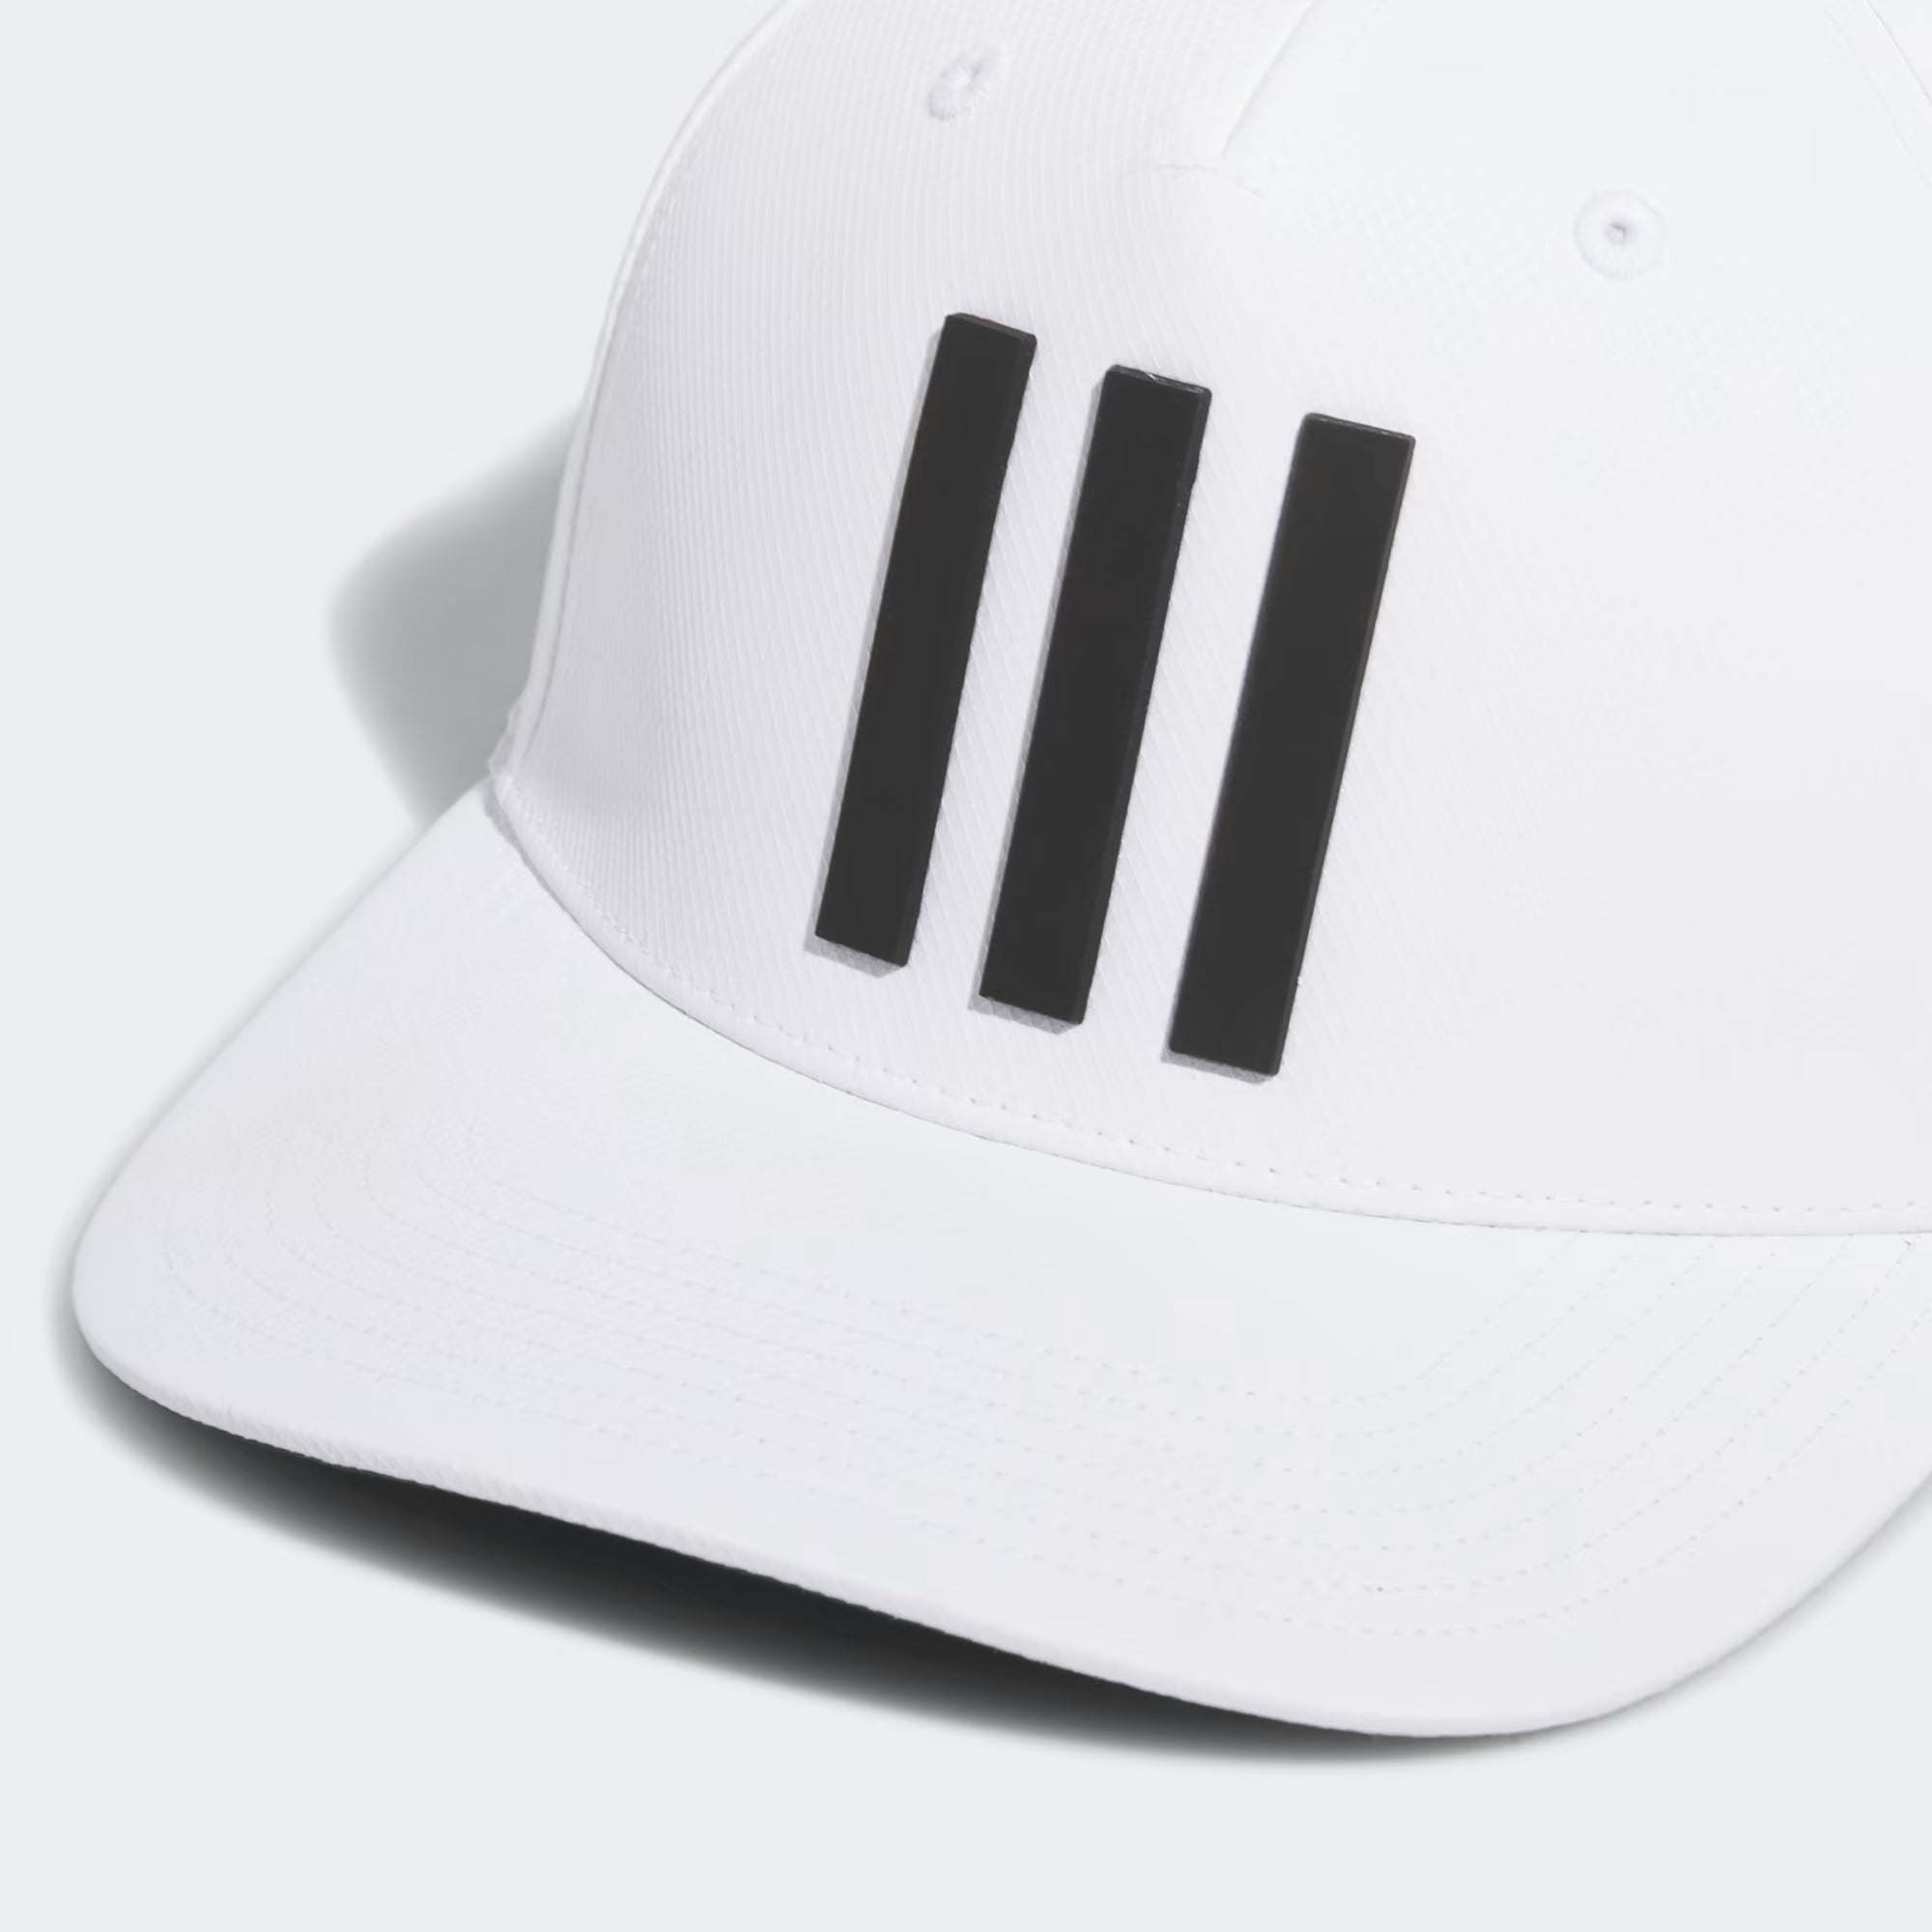 Adidas Stripes Tour Hat - Men